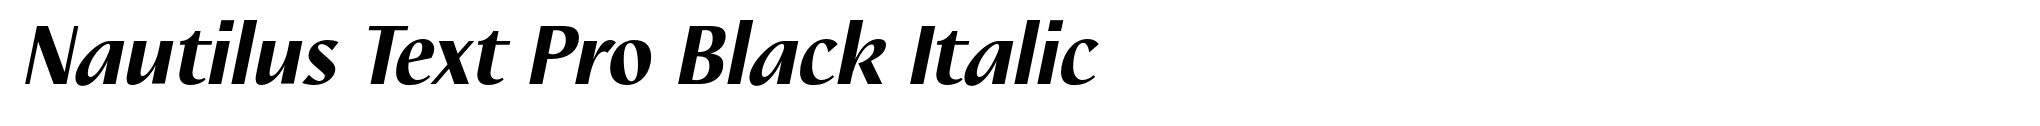 Nautilus Text Pro Black Italic image